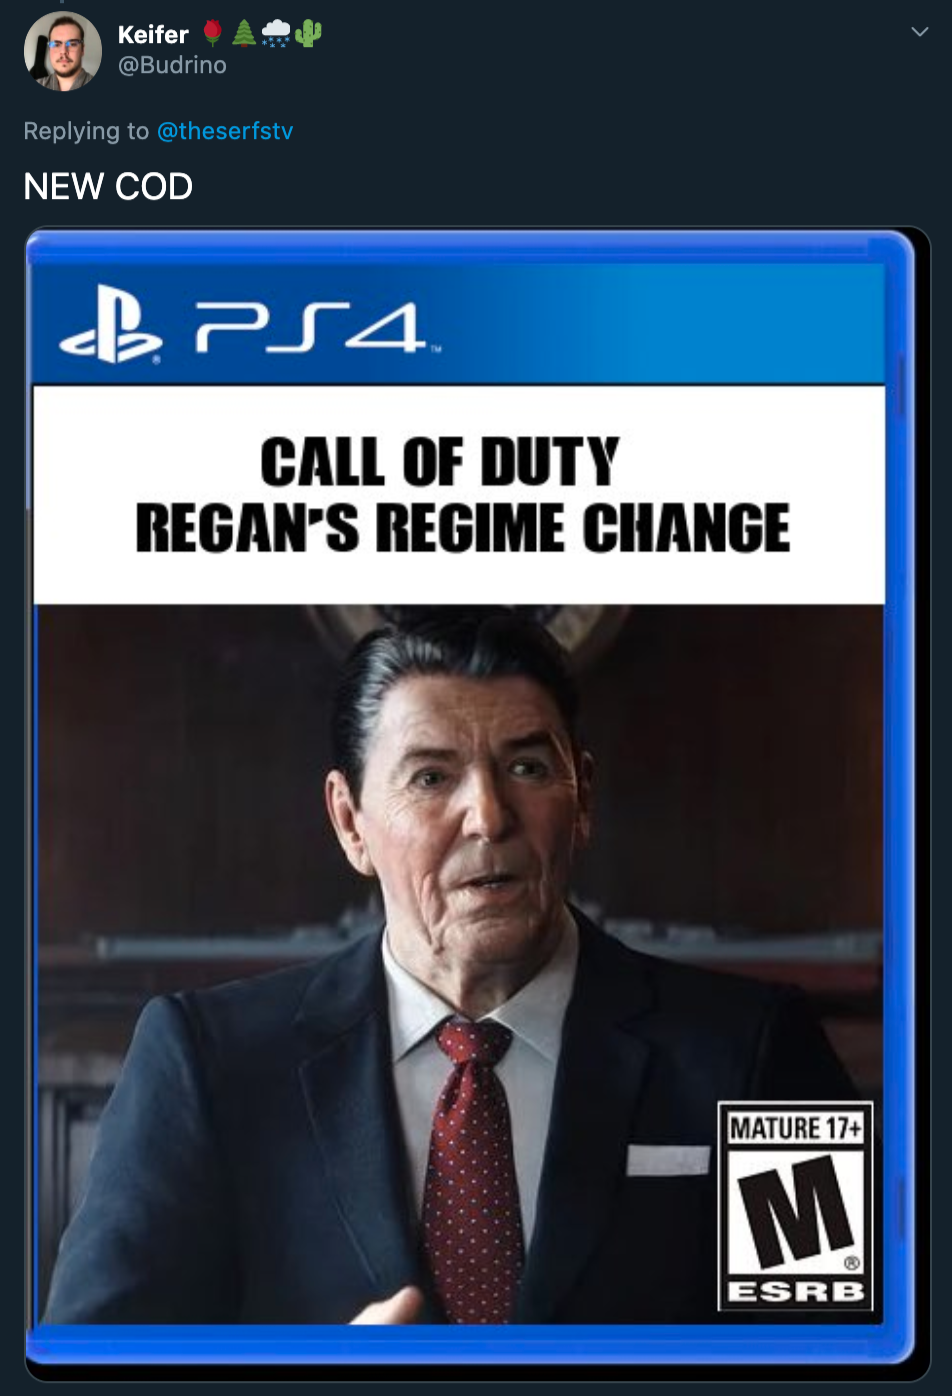 New Cod B PS4 Call Of Duty Regan'S Regime Change Mature